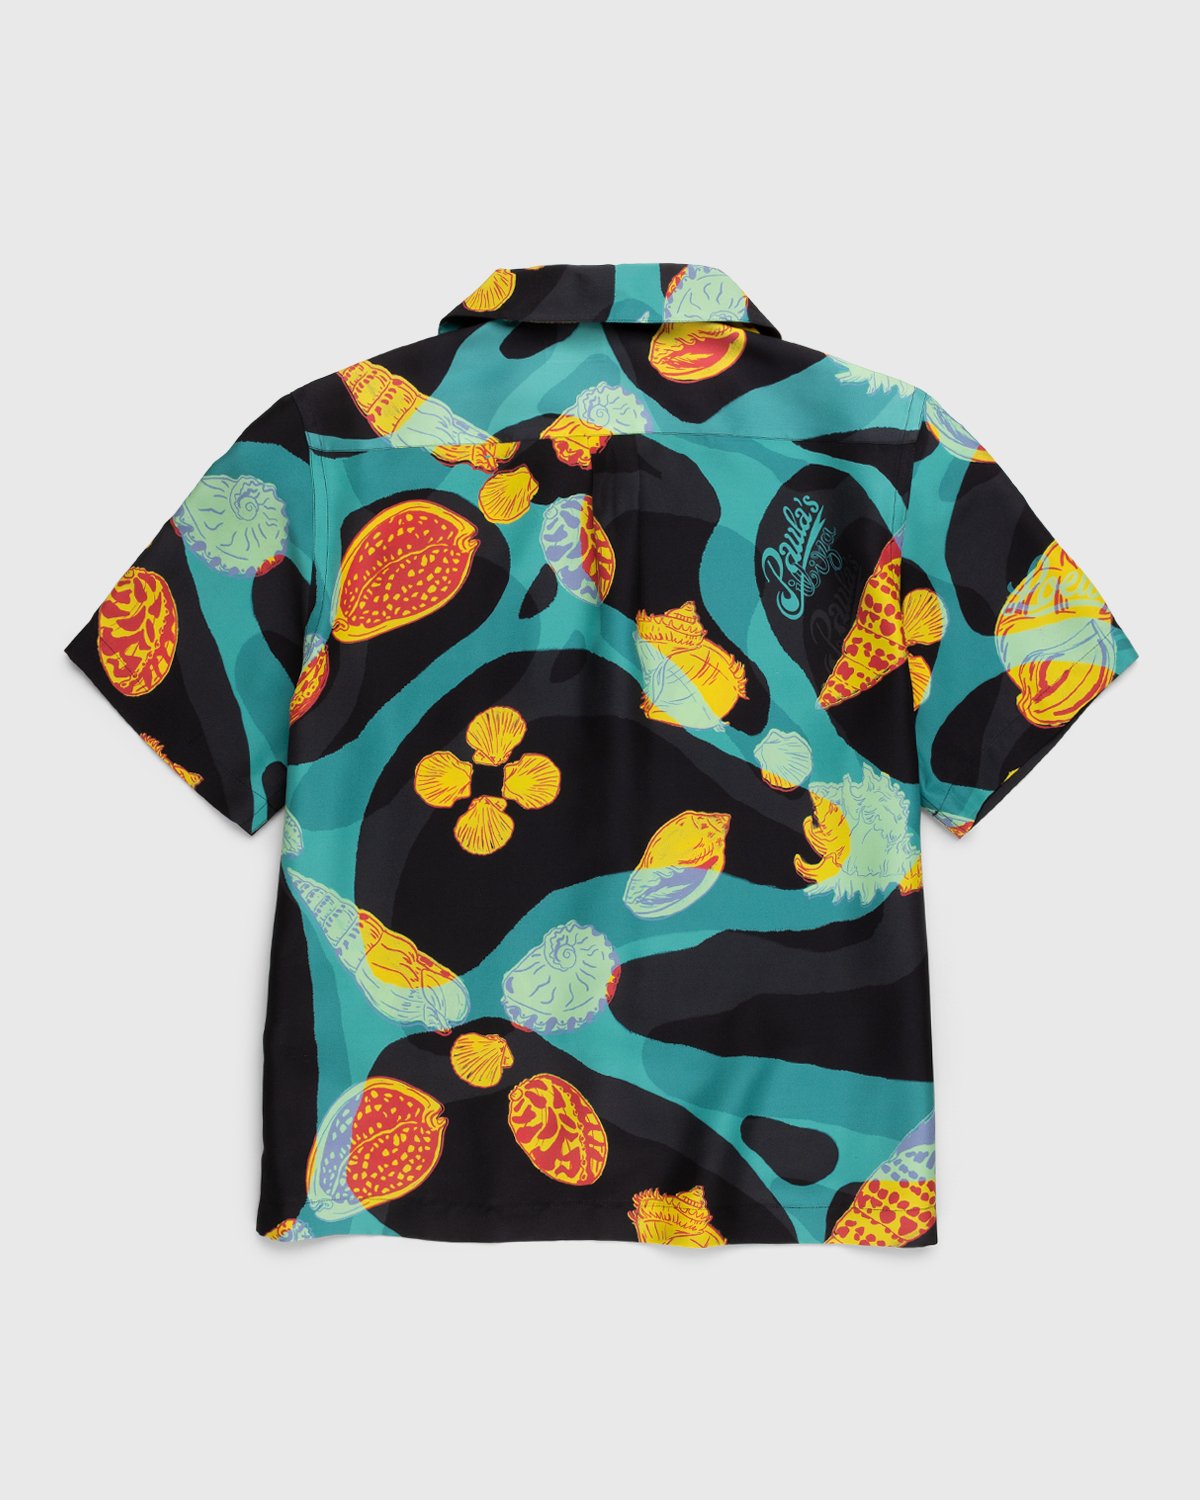 Loewe - Paula's Ibiza Shell Print Bowling Shirt Black - Clothing - Multi - Image 2